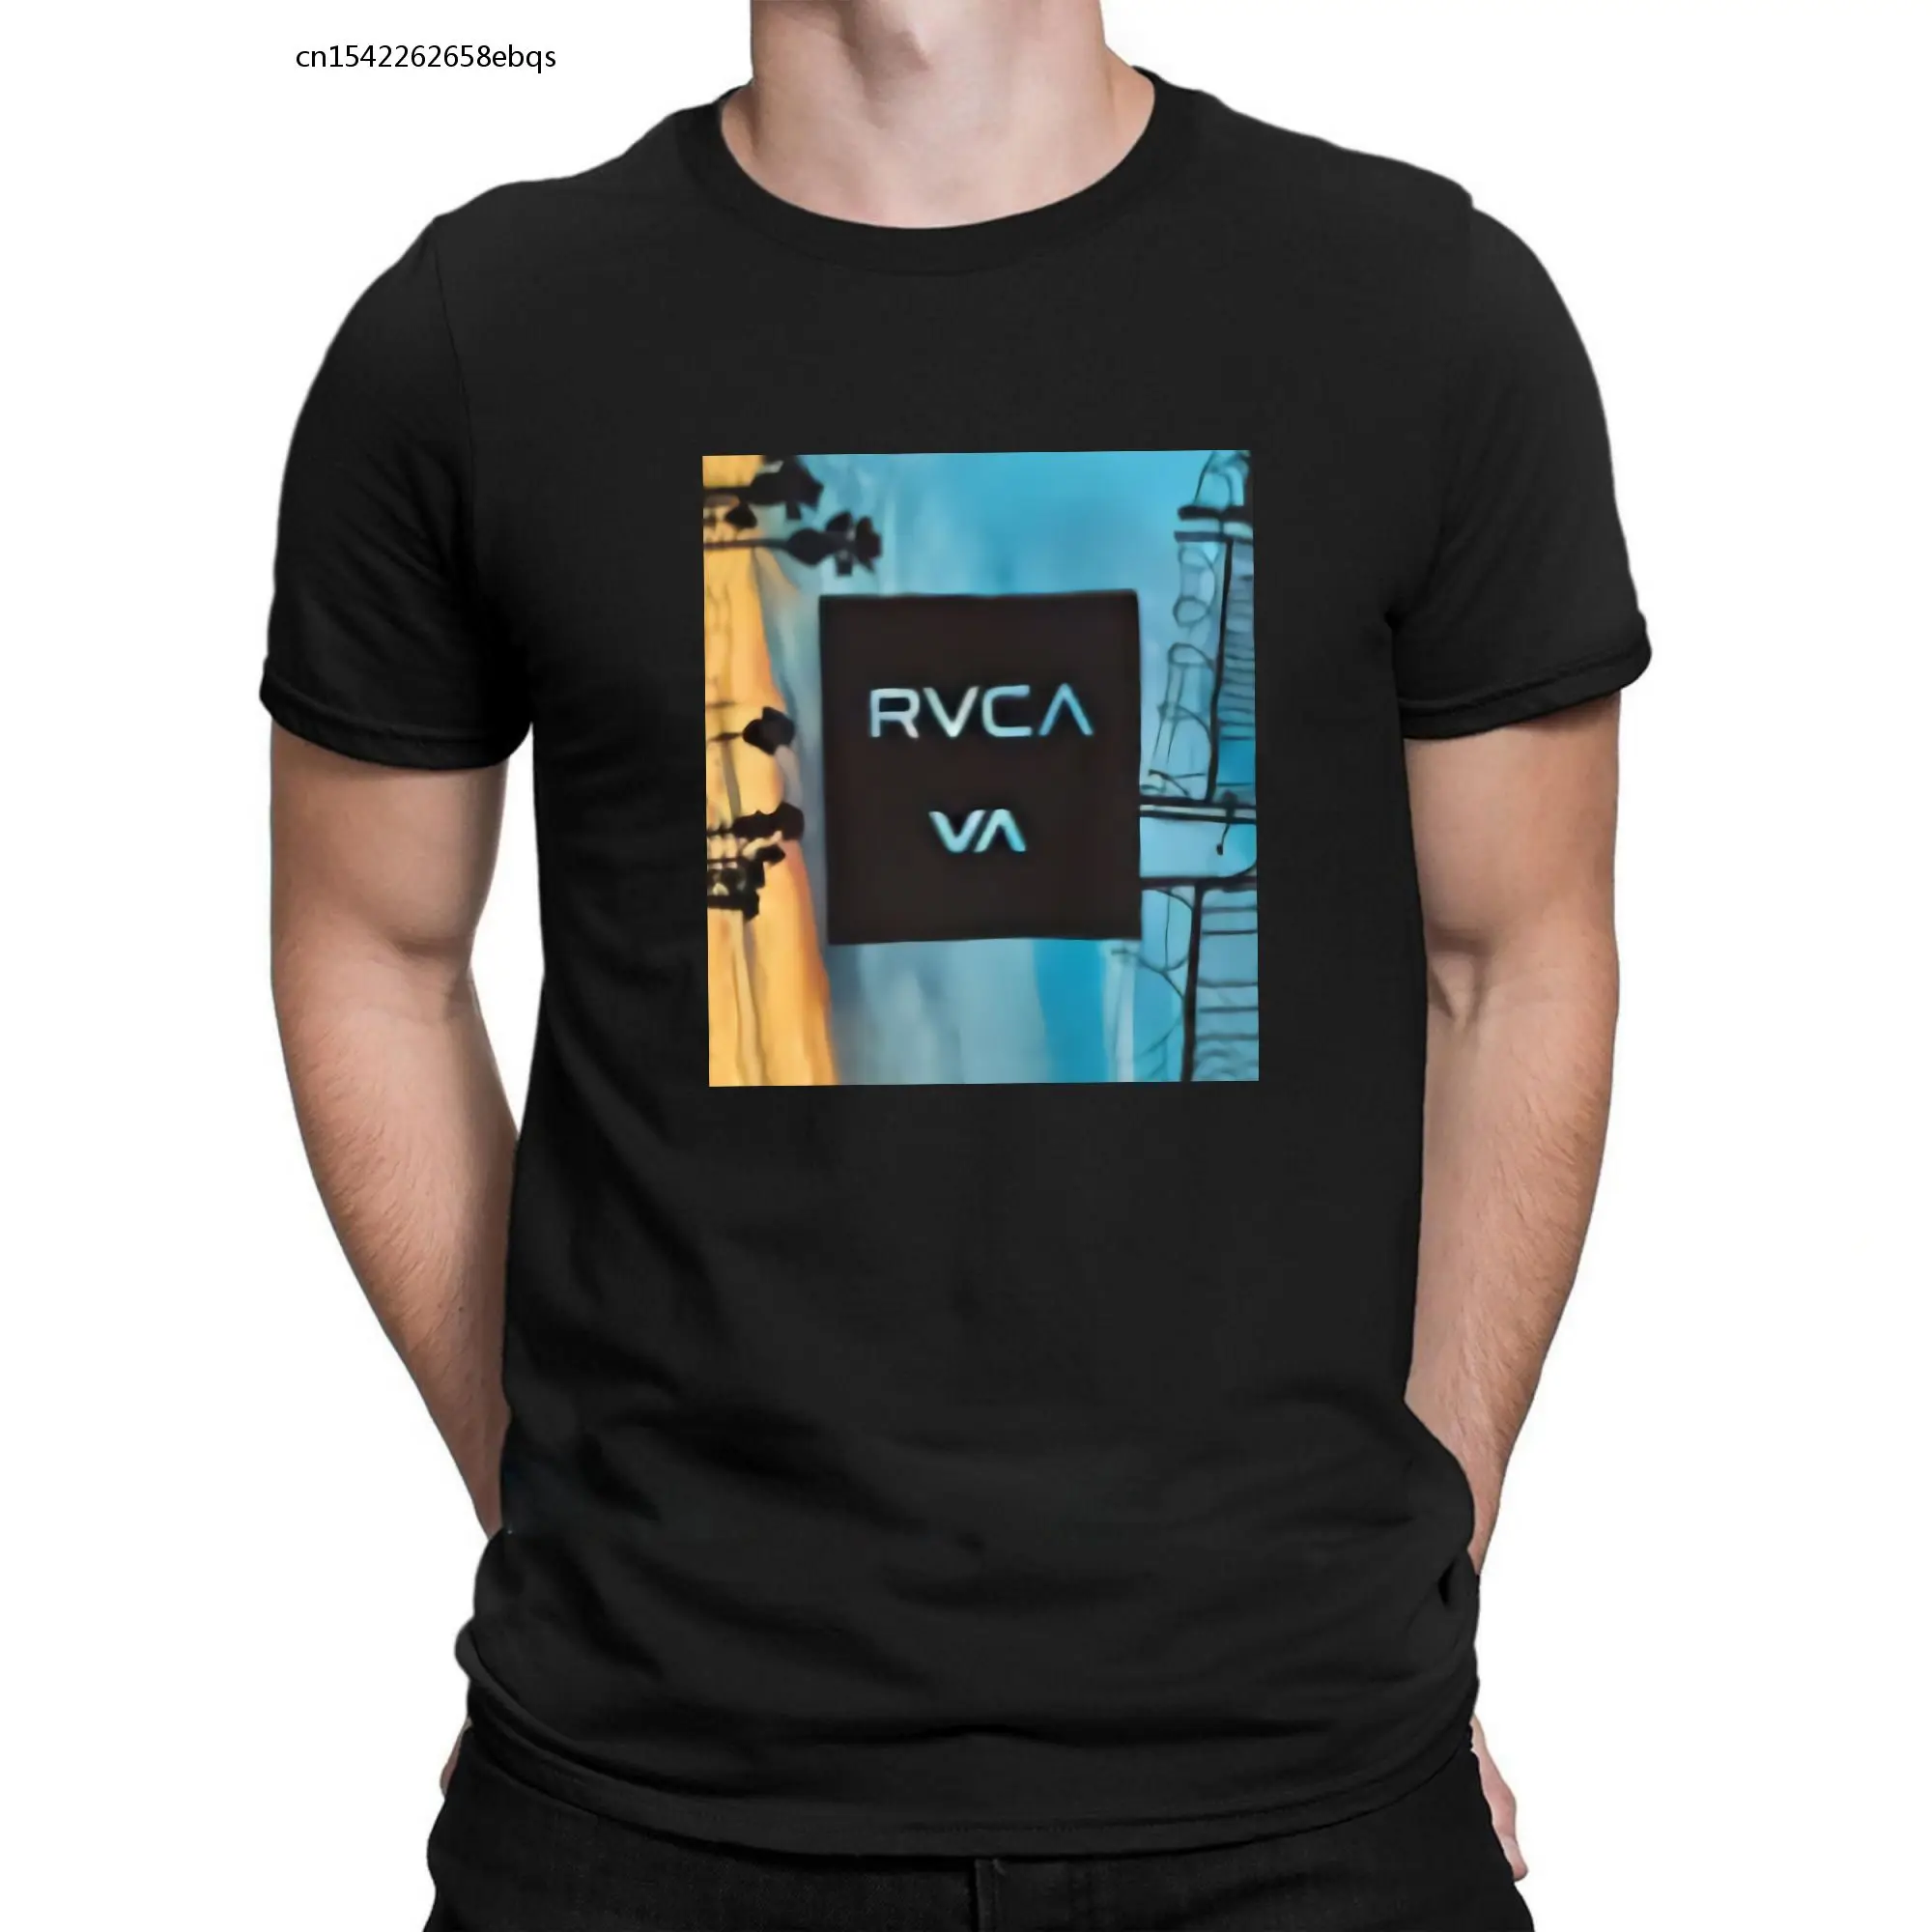 

Мужская футболка с надписью Lasting Charm Rvca, летняя стильная футболка с уникальным дизайном